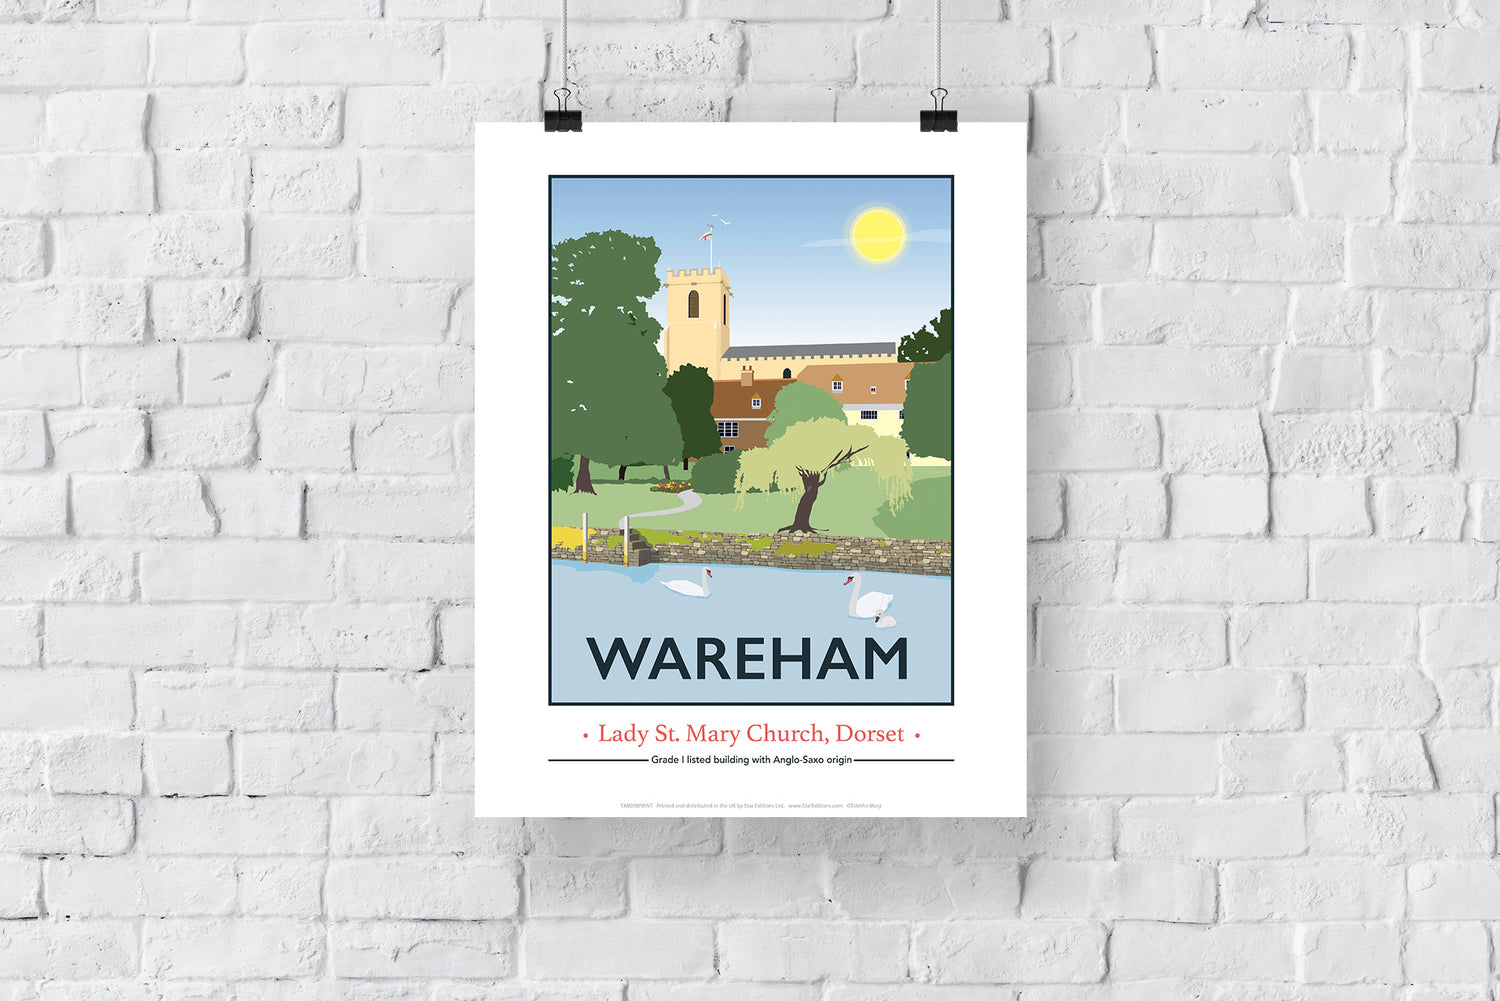 Wareham, Dorset - Art Print